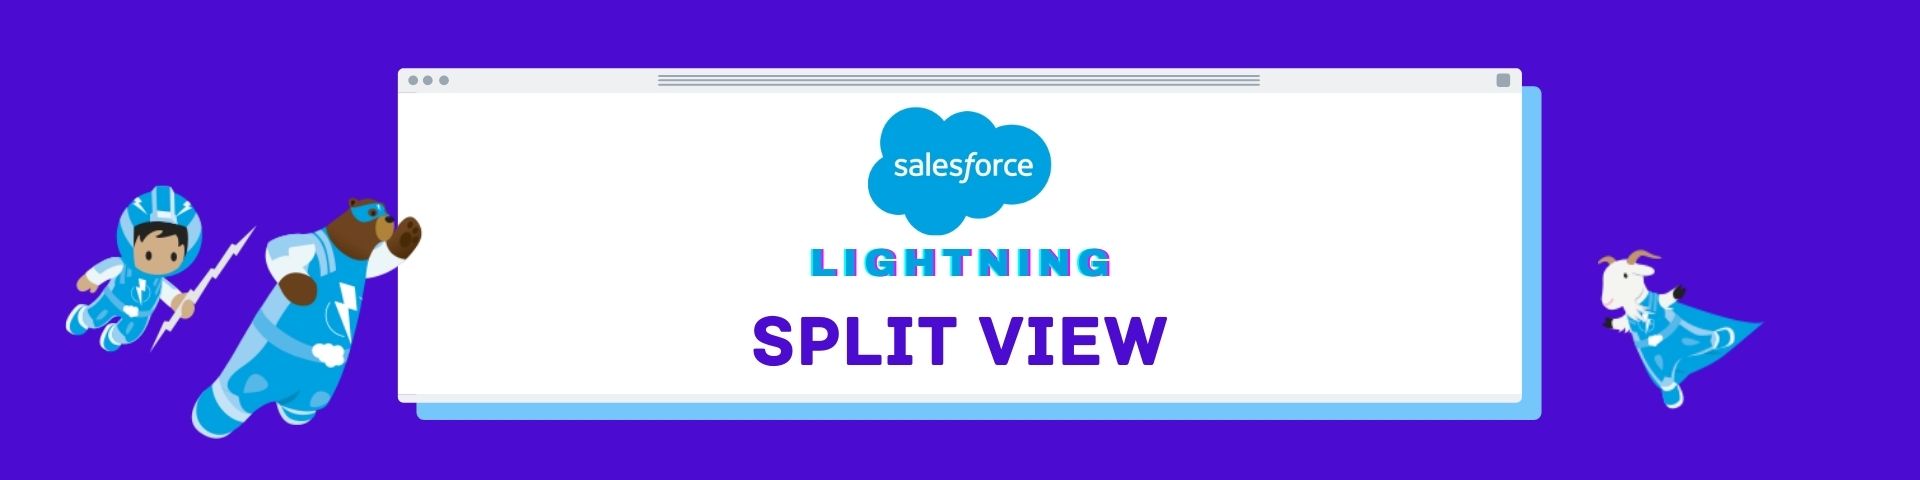 Salesforce Lightning Split view